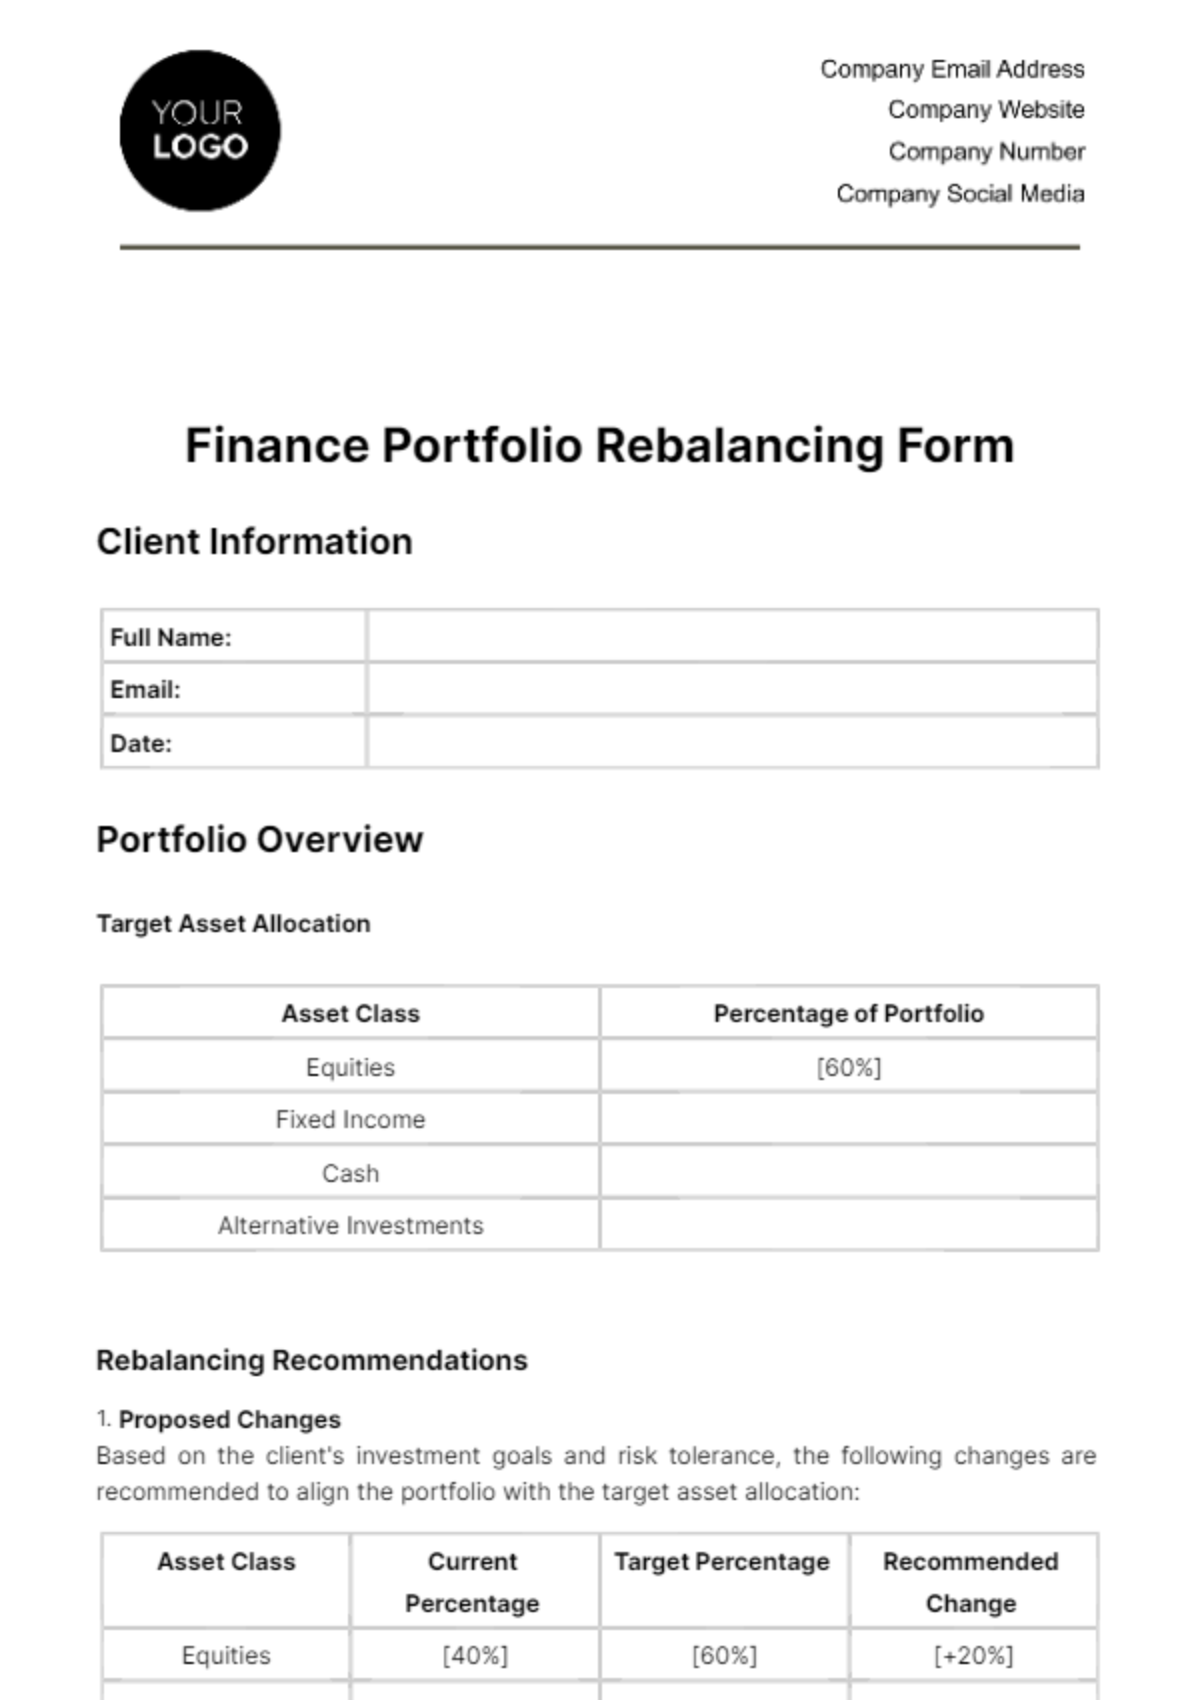 Finance Portfolio Rebalancing Form Template